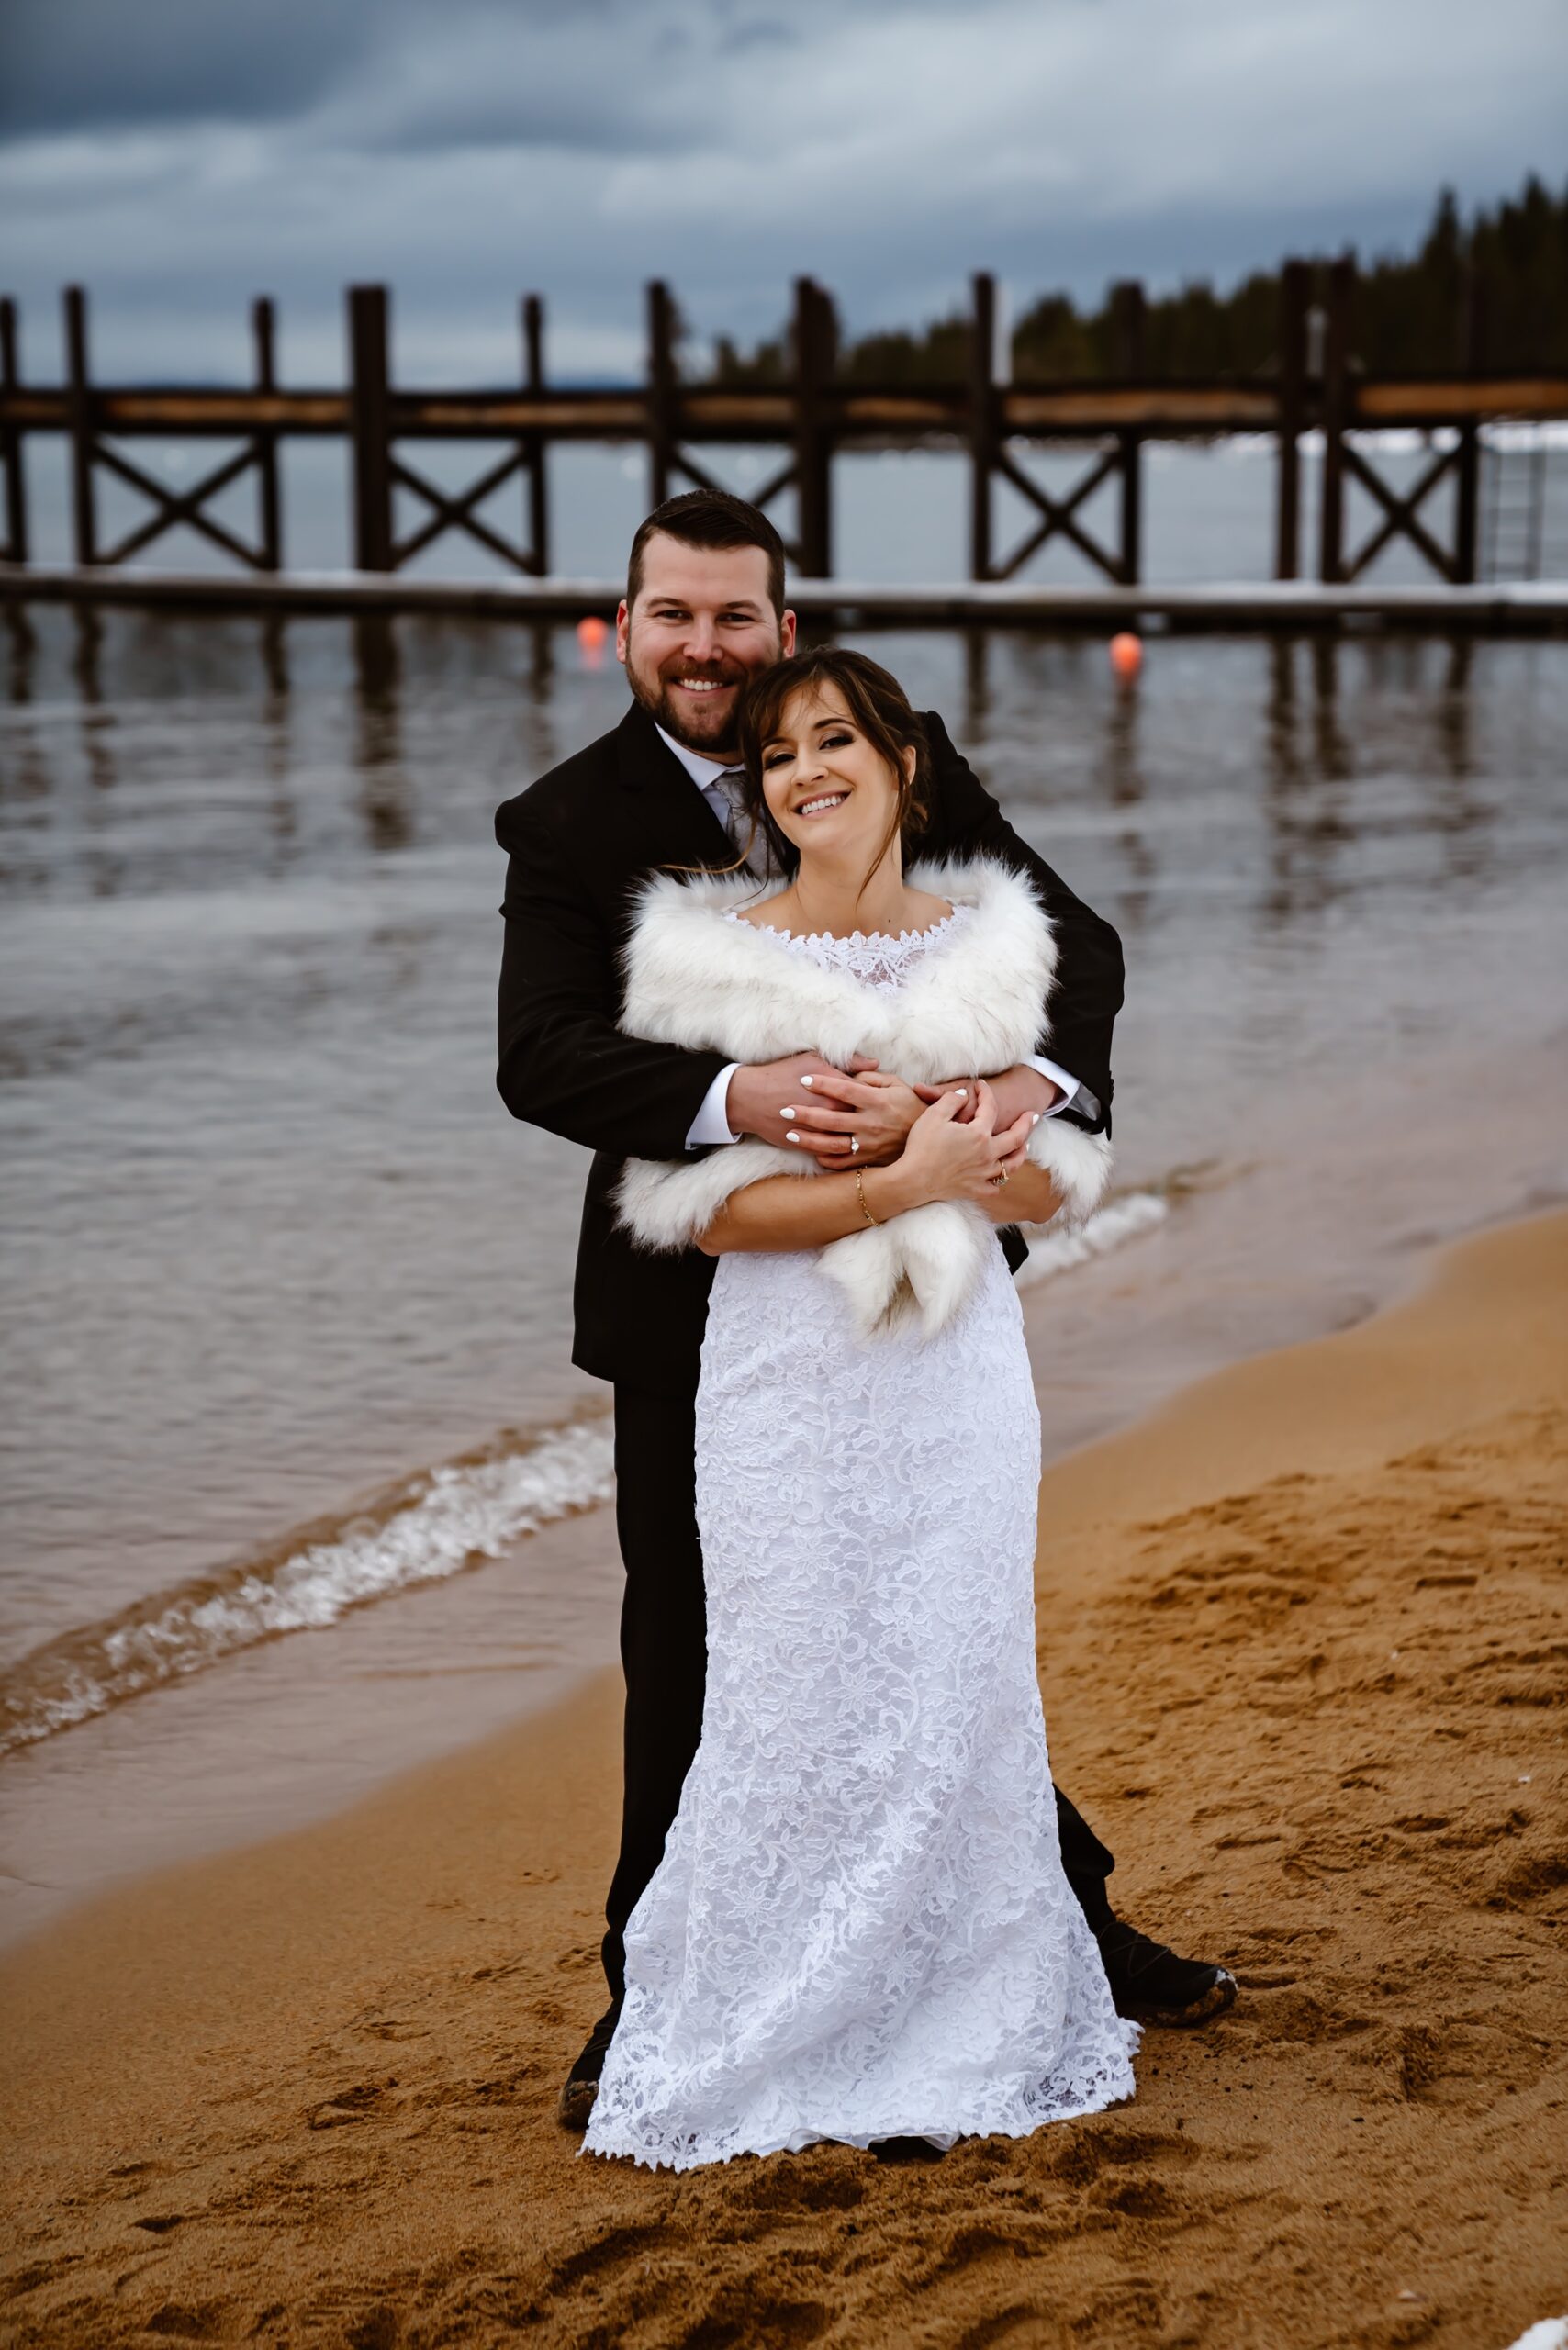 Zephyr Cove winter elopement photos of bride and groom